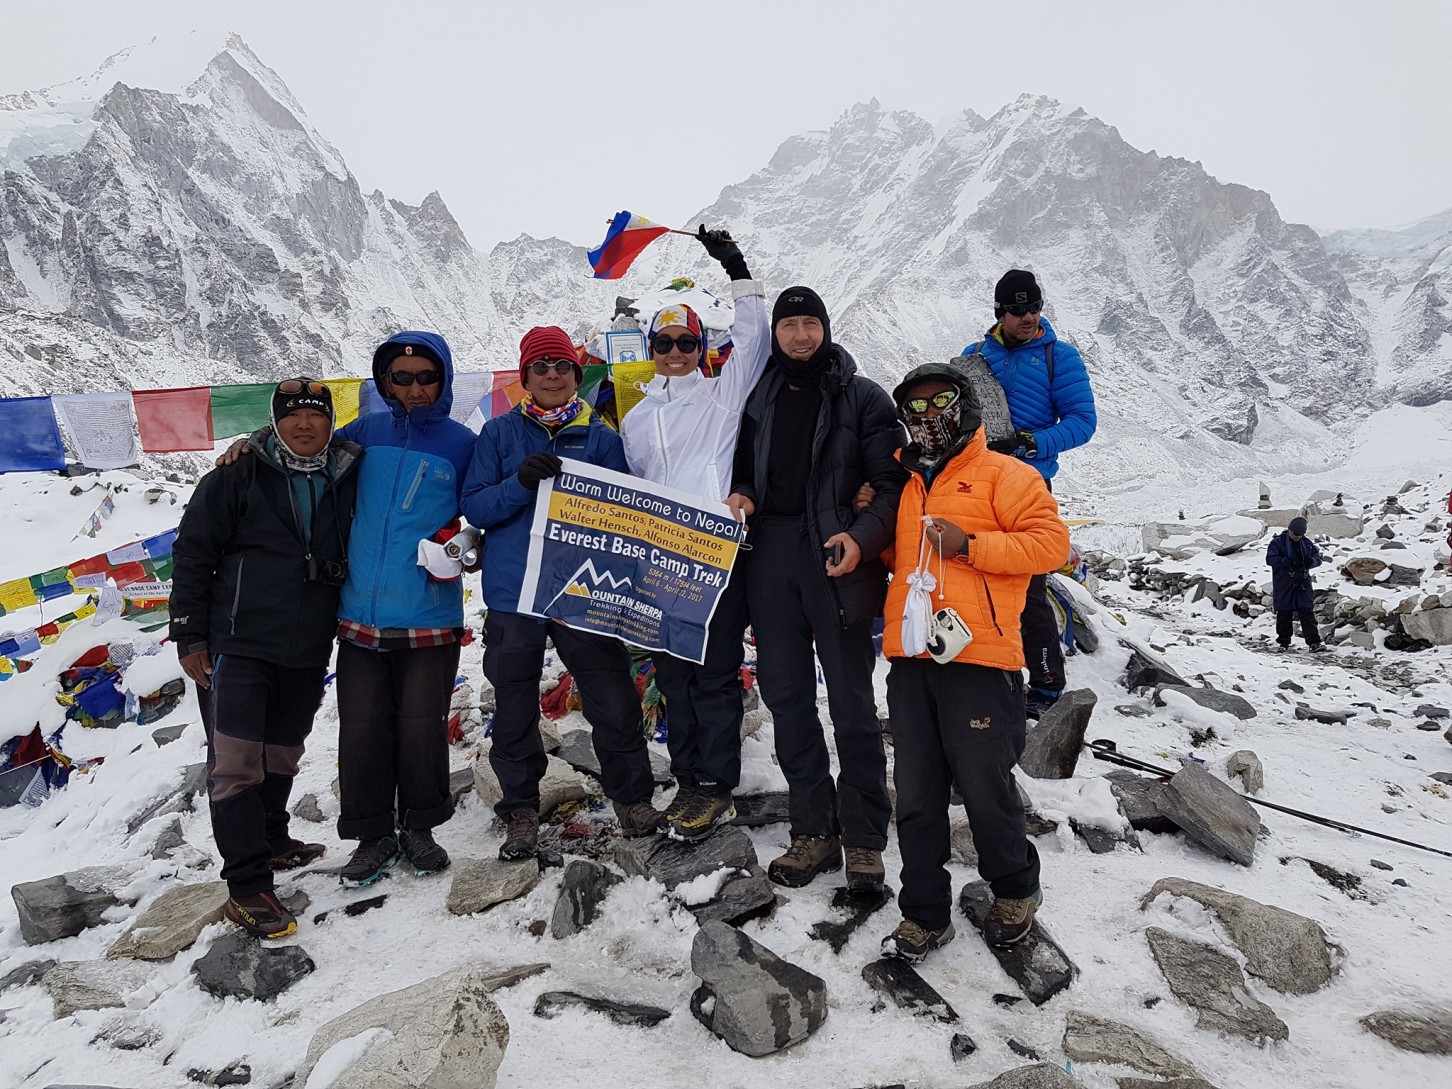 How to trek Everest base camp safely?